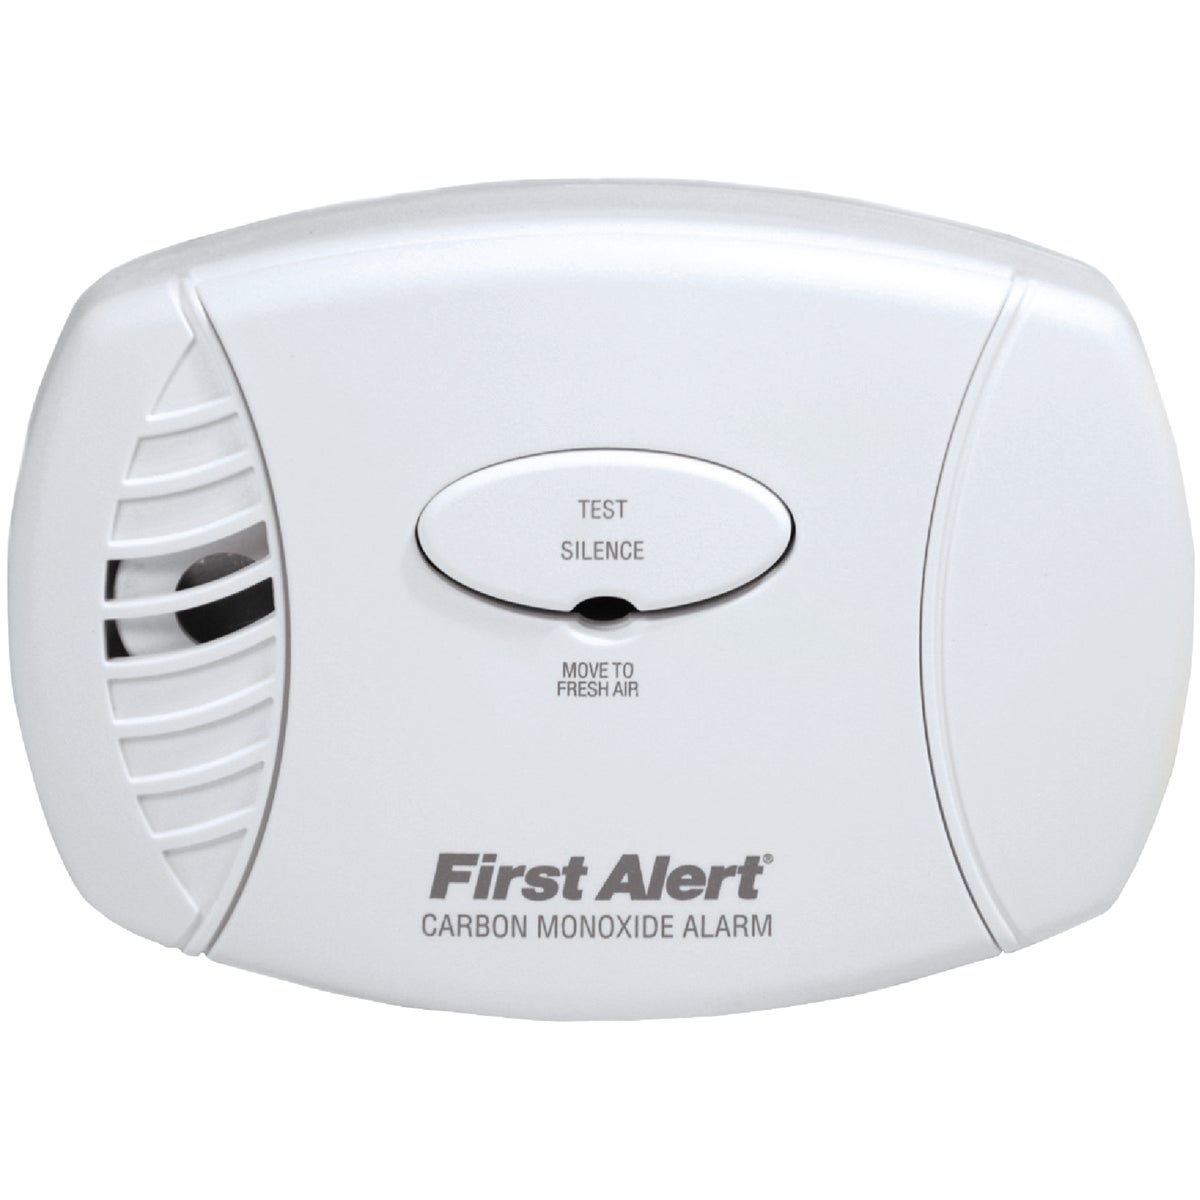 Item 520853, Plug-in CO (carbon monoxide) alarm with battery back-up utilizes an 